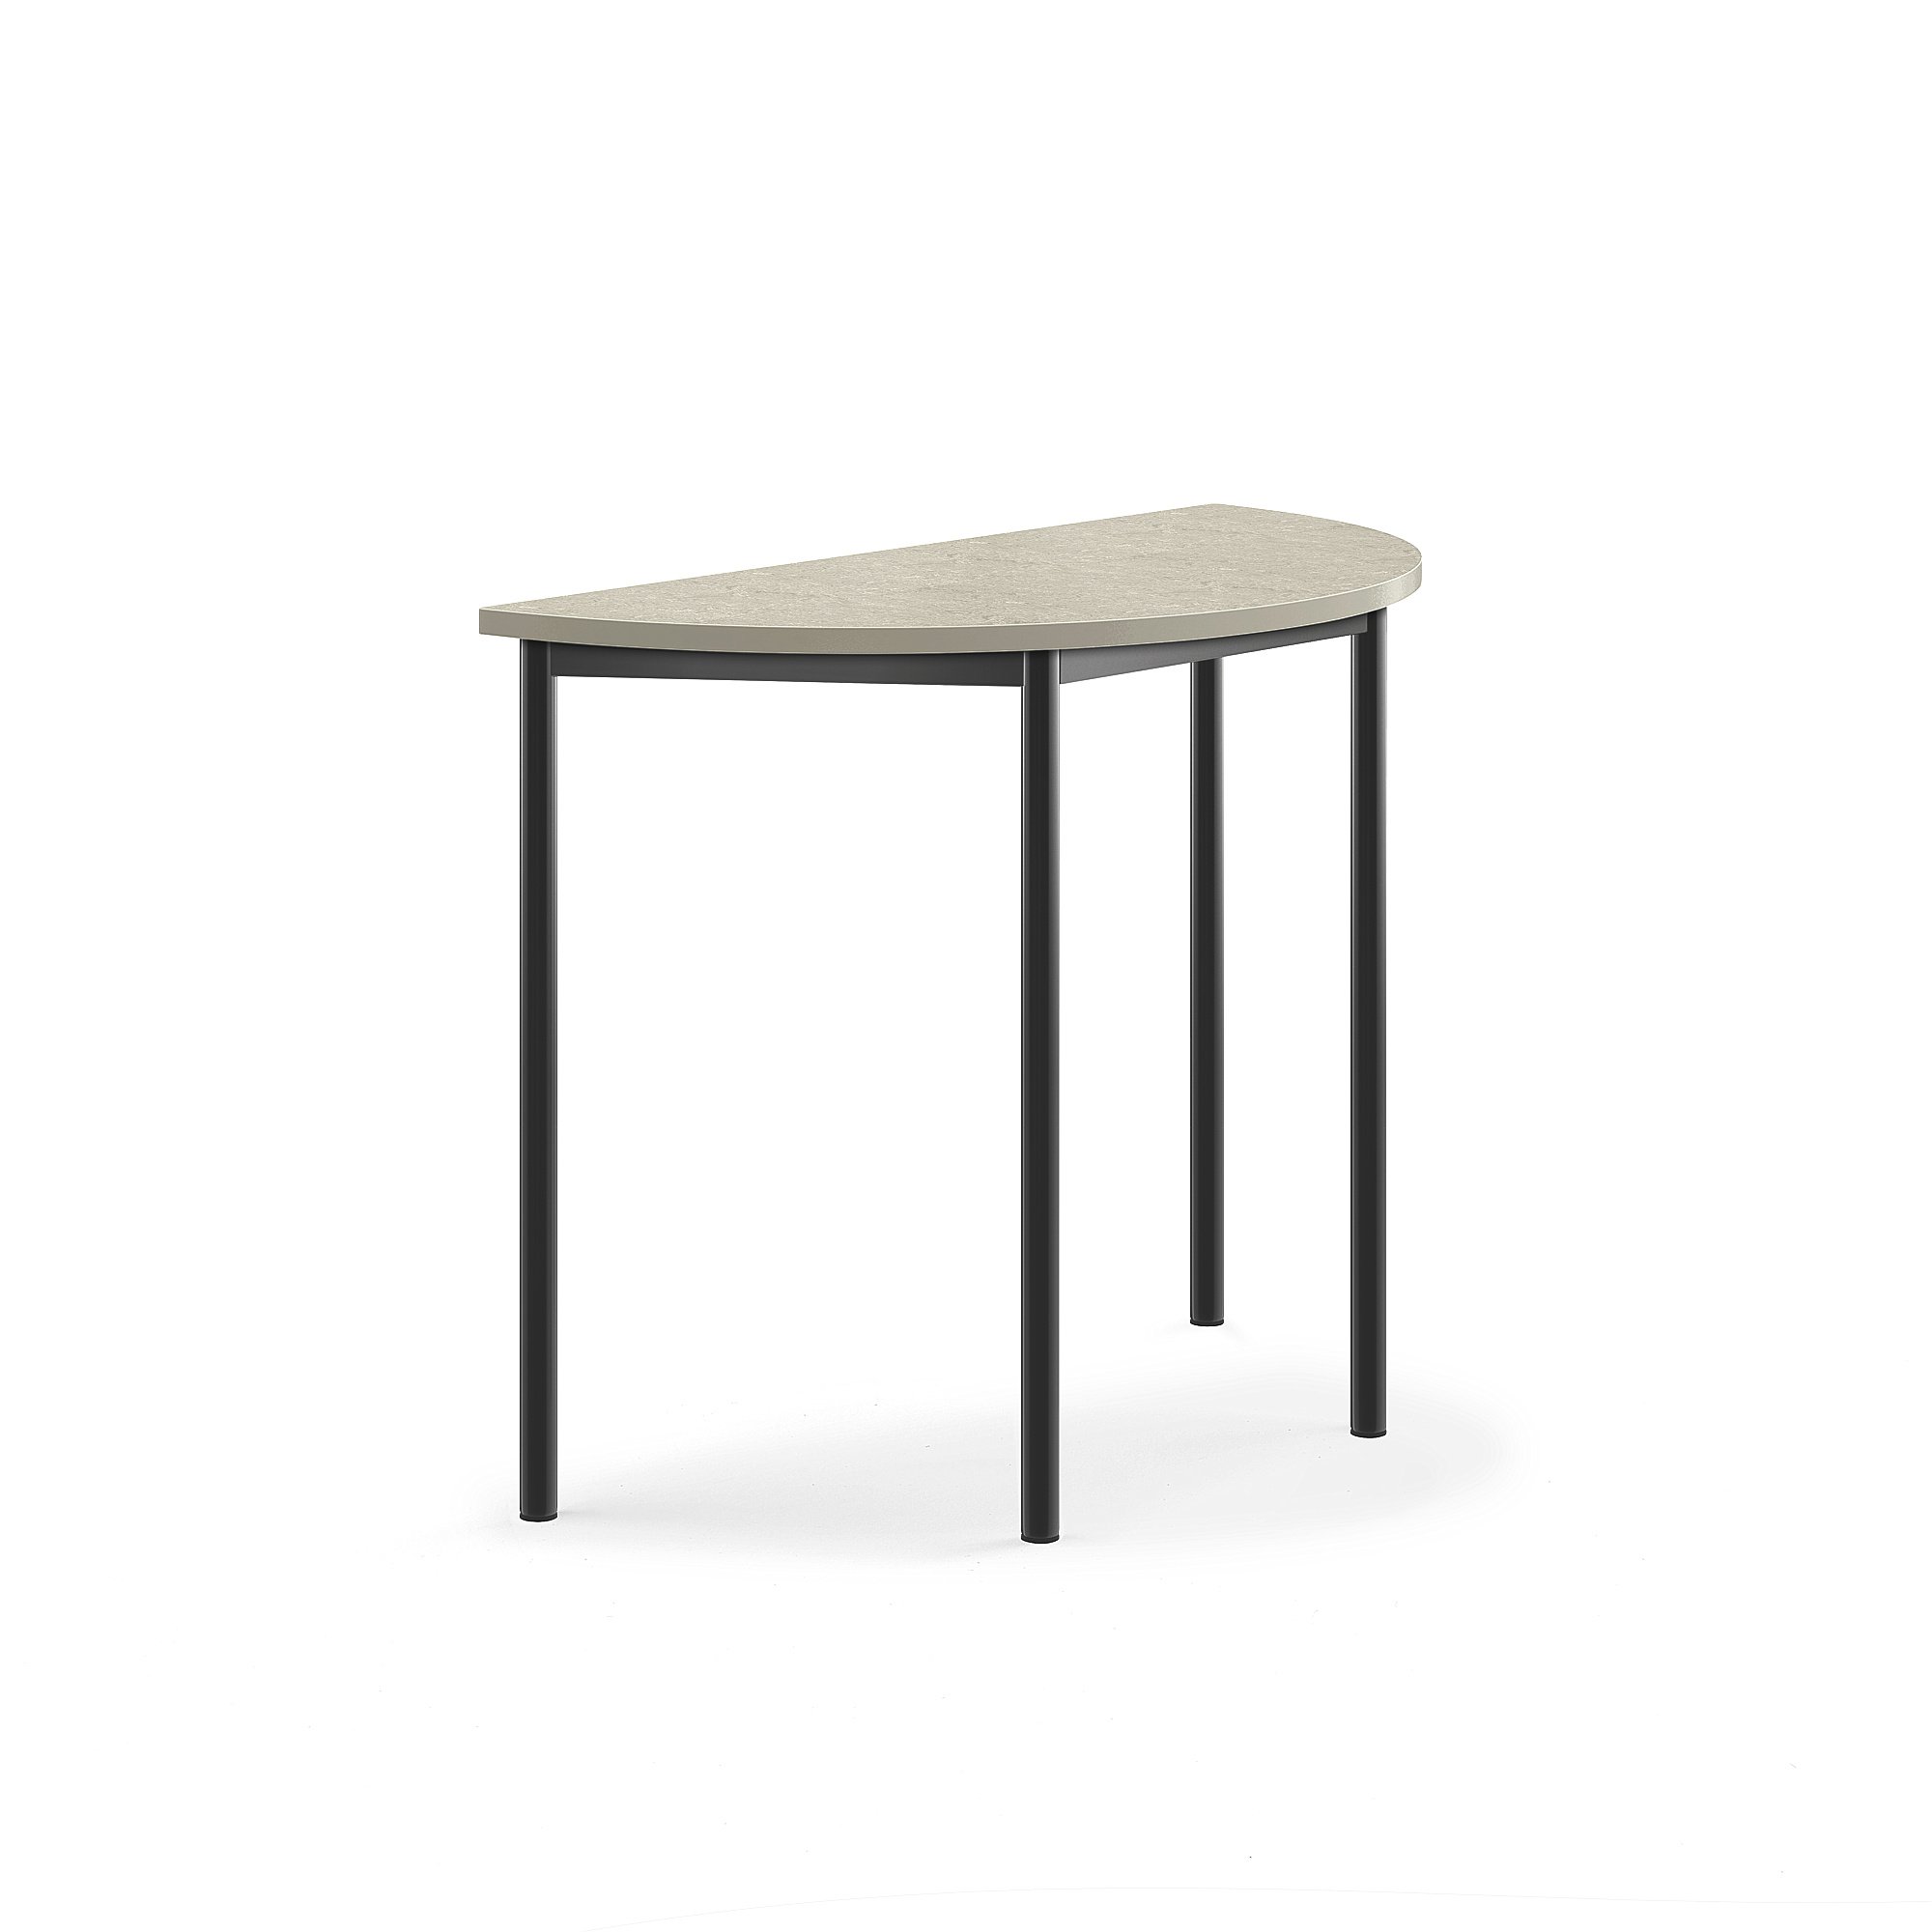 Stůl SONITUS, půlkruh, 1200x600x900 mm, antracitově šedé nohy, deska s linoleem, šedá